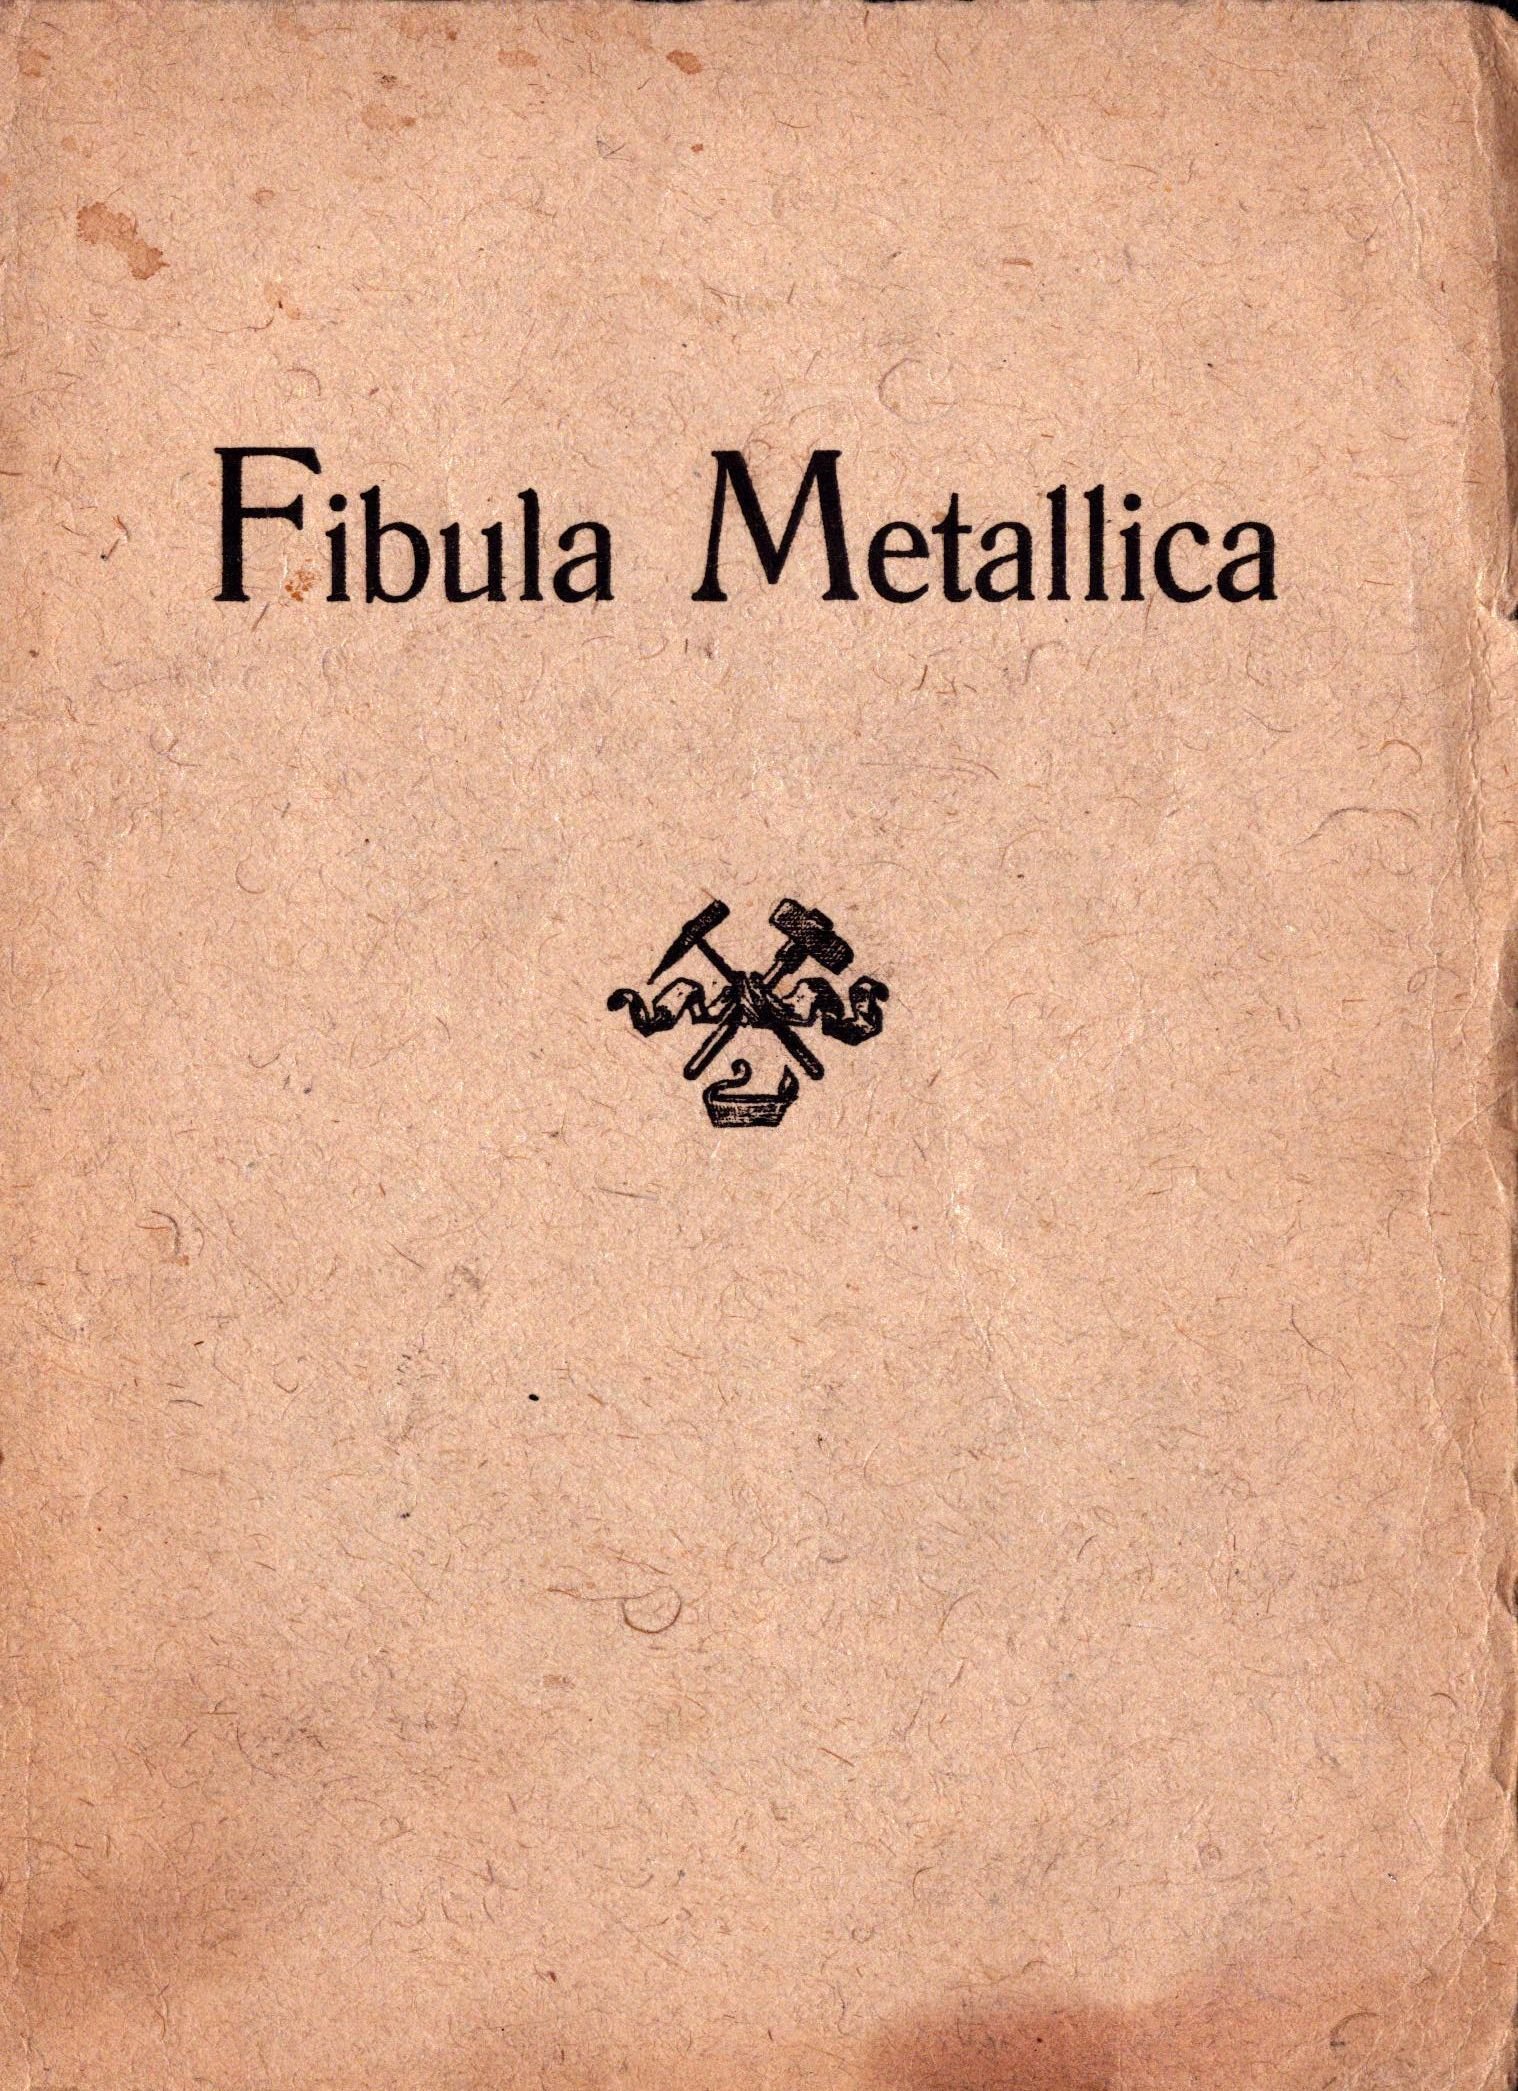 Fibula Metallica (Archiv SAXONIA-FREIBERG-STIFTUNG CC BY-NC-SA)